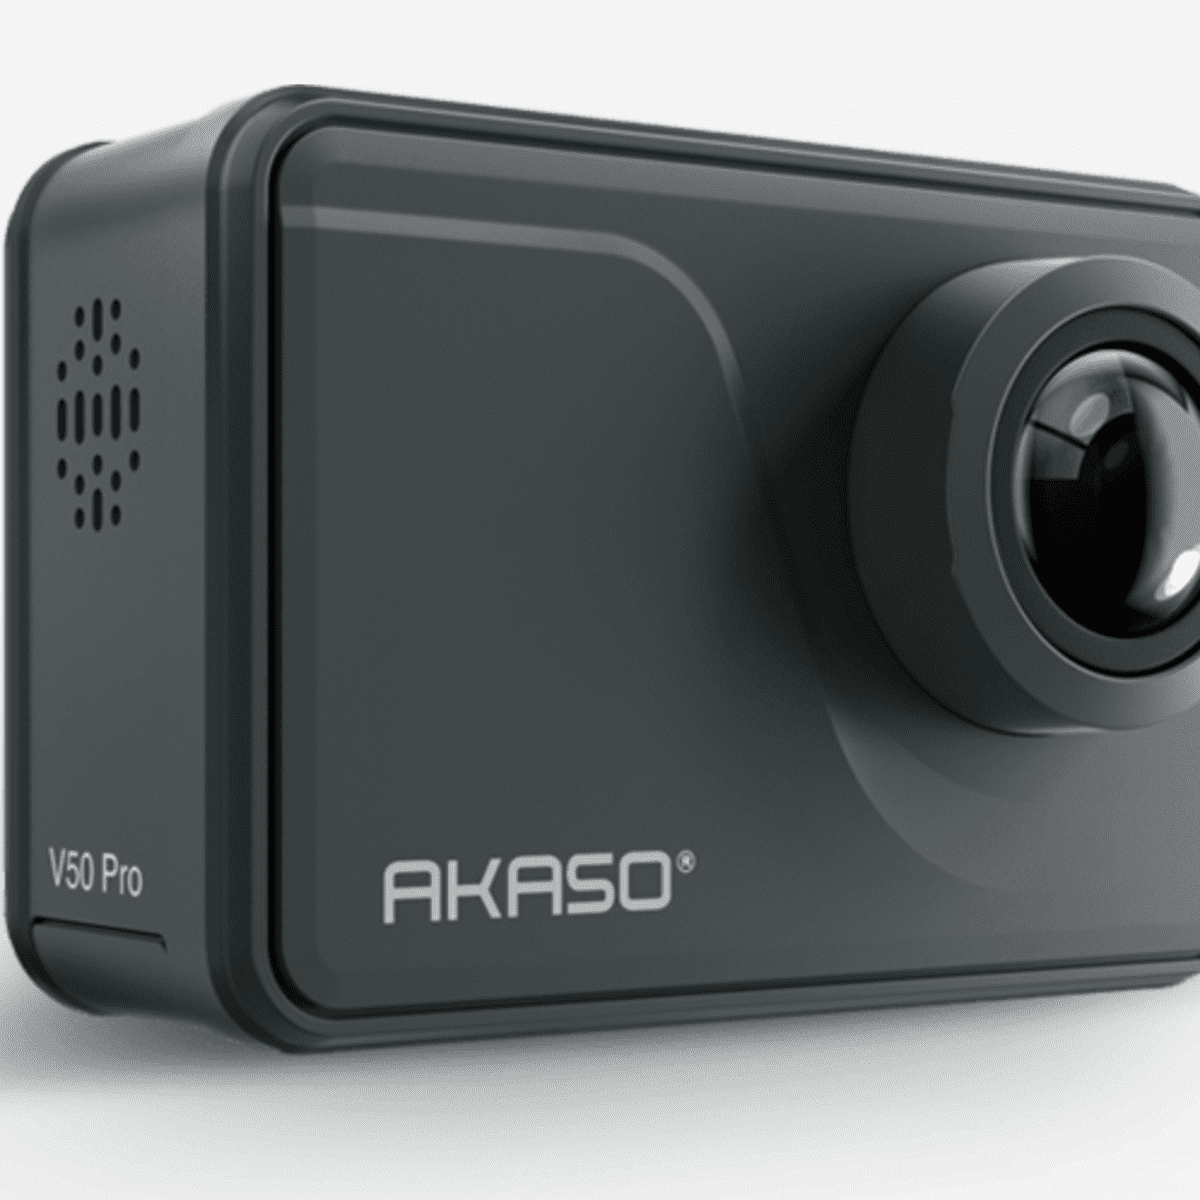 Akaso V50 Pro Action Camera Review - TurboFuture